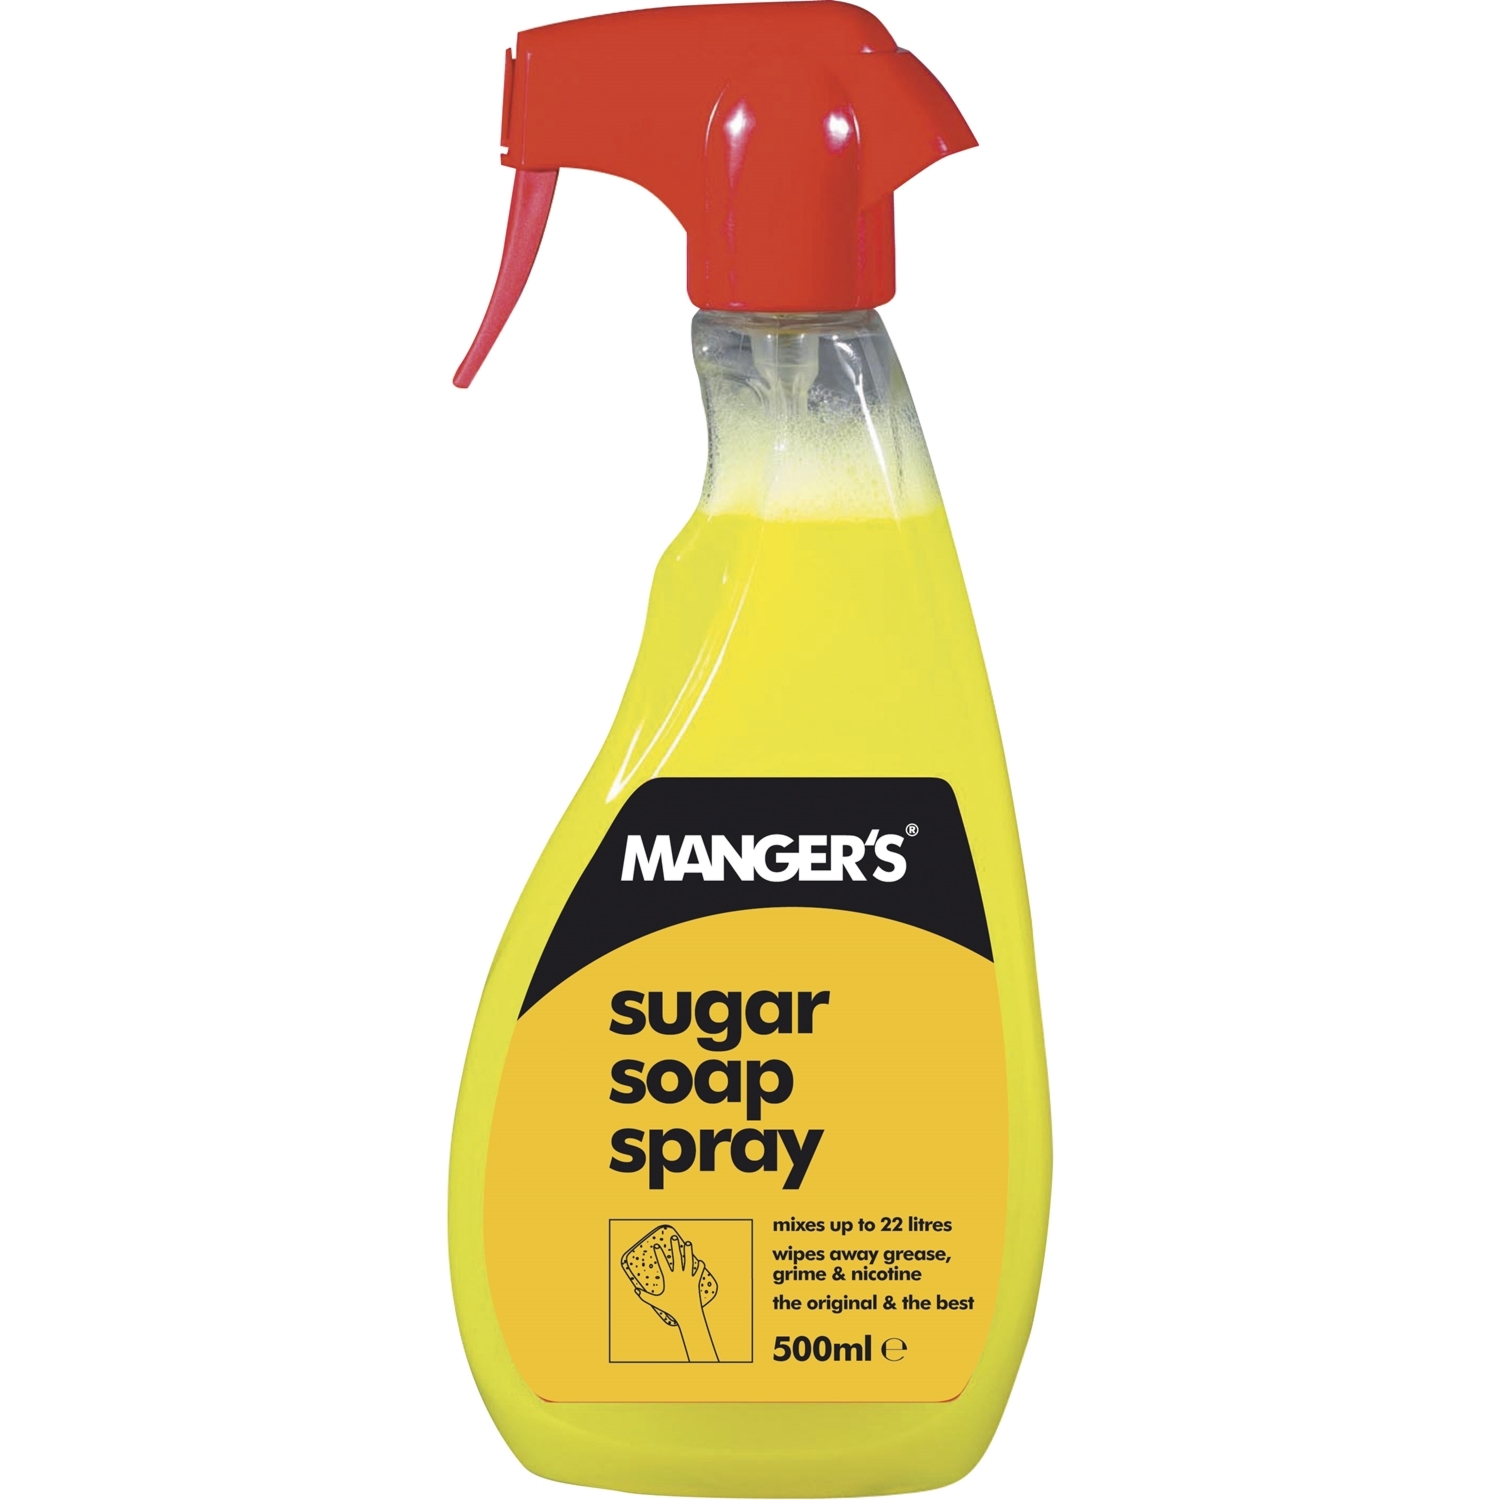 Manger's Sugar Soap Spray 500ml Image